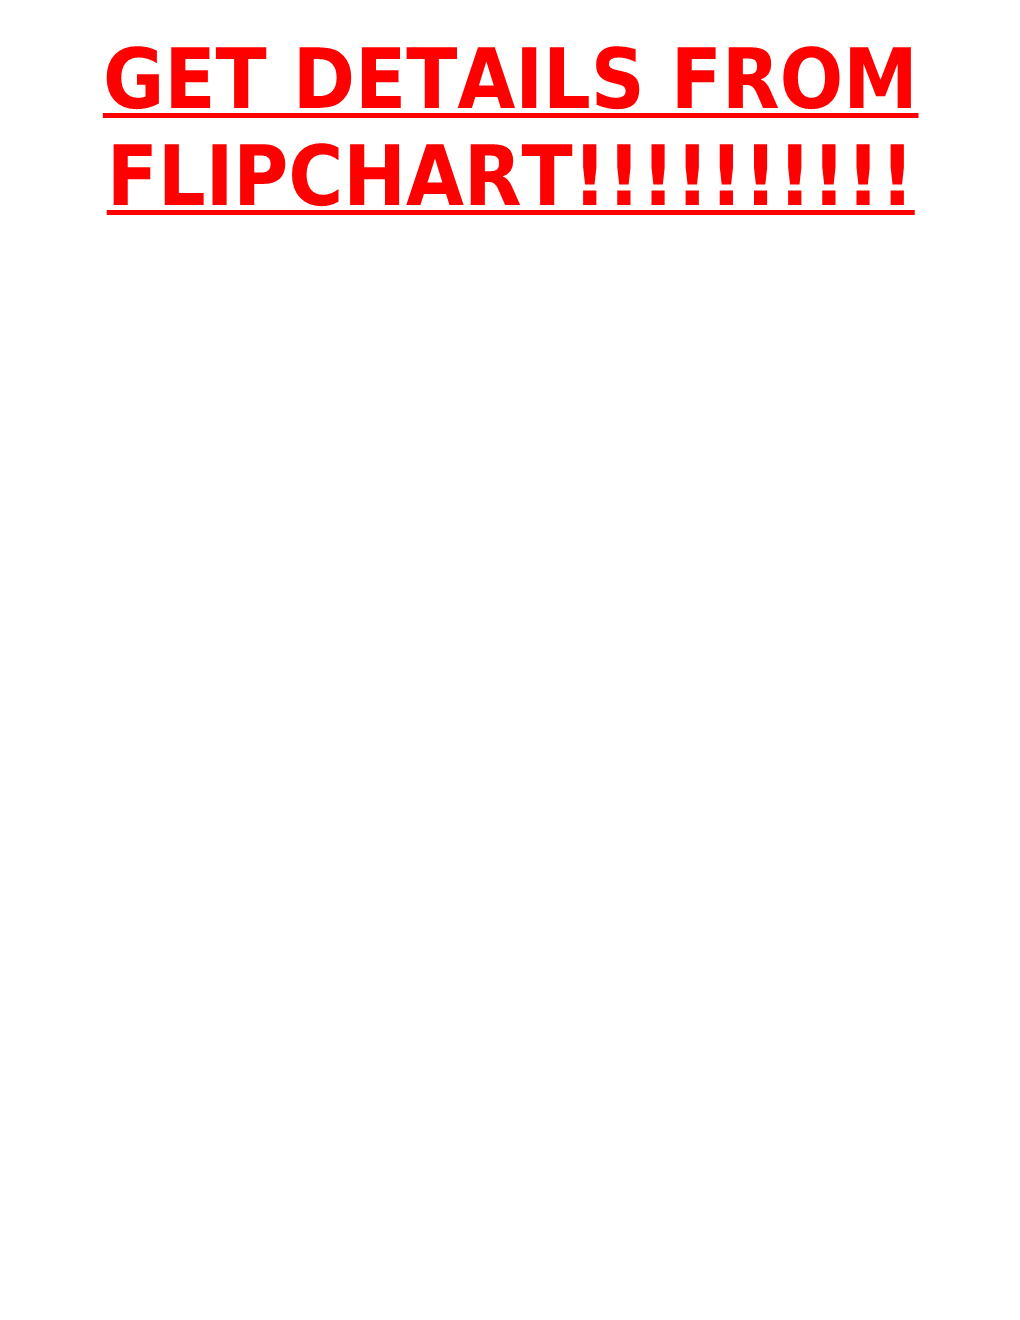 Get Details from Flipchart